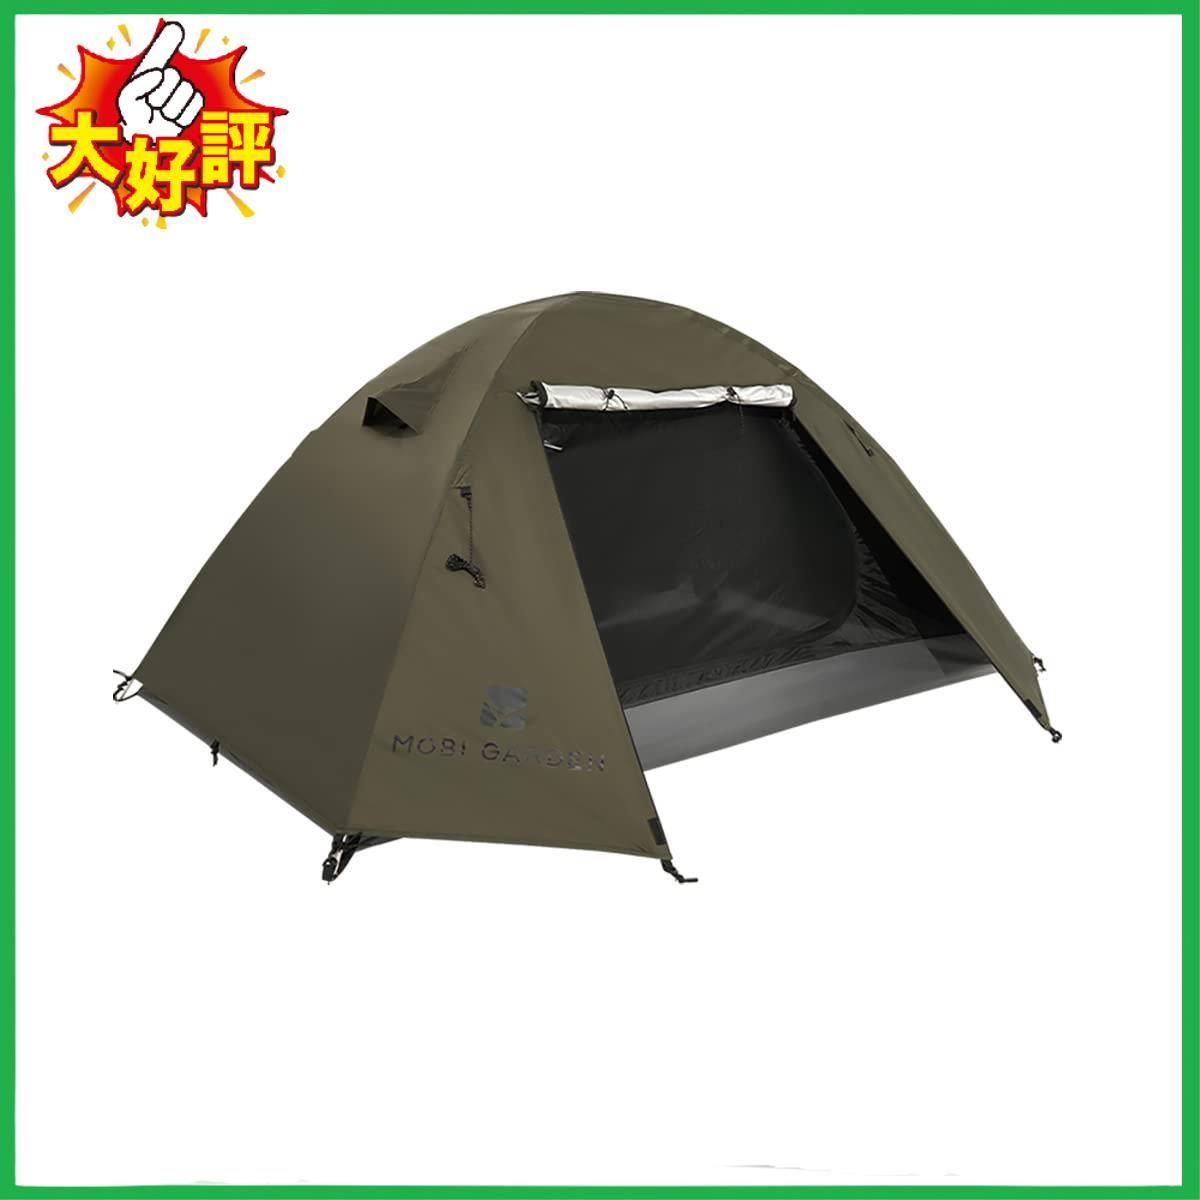 □MOBI GARDEN テント 軽量 コンパクト UVカット 二重層 設営簡単 自立